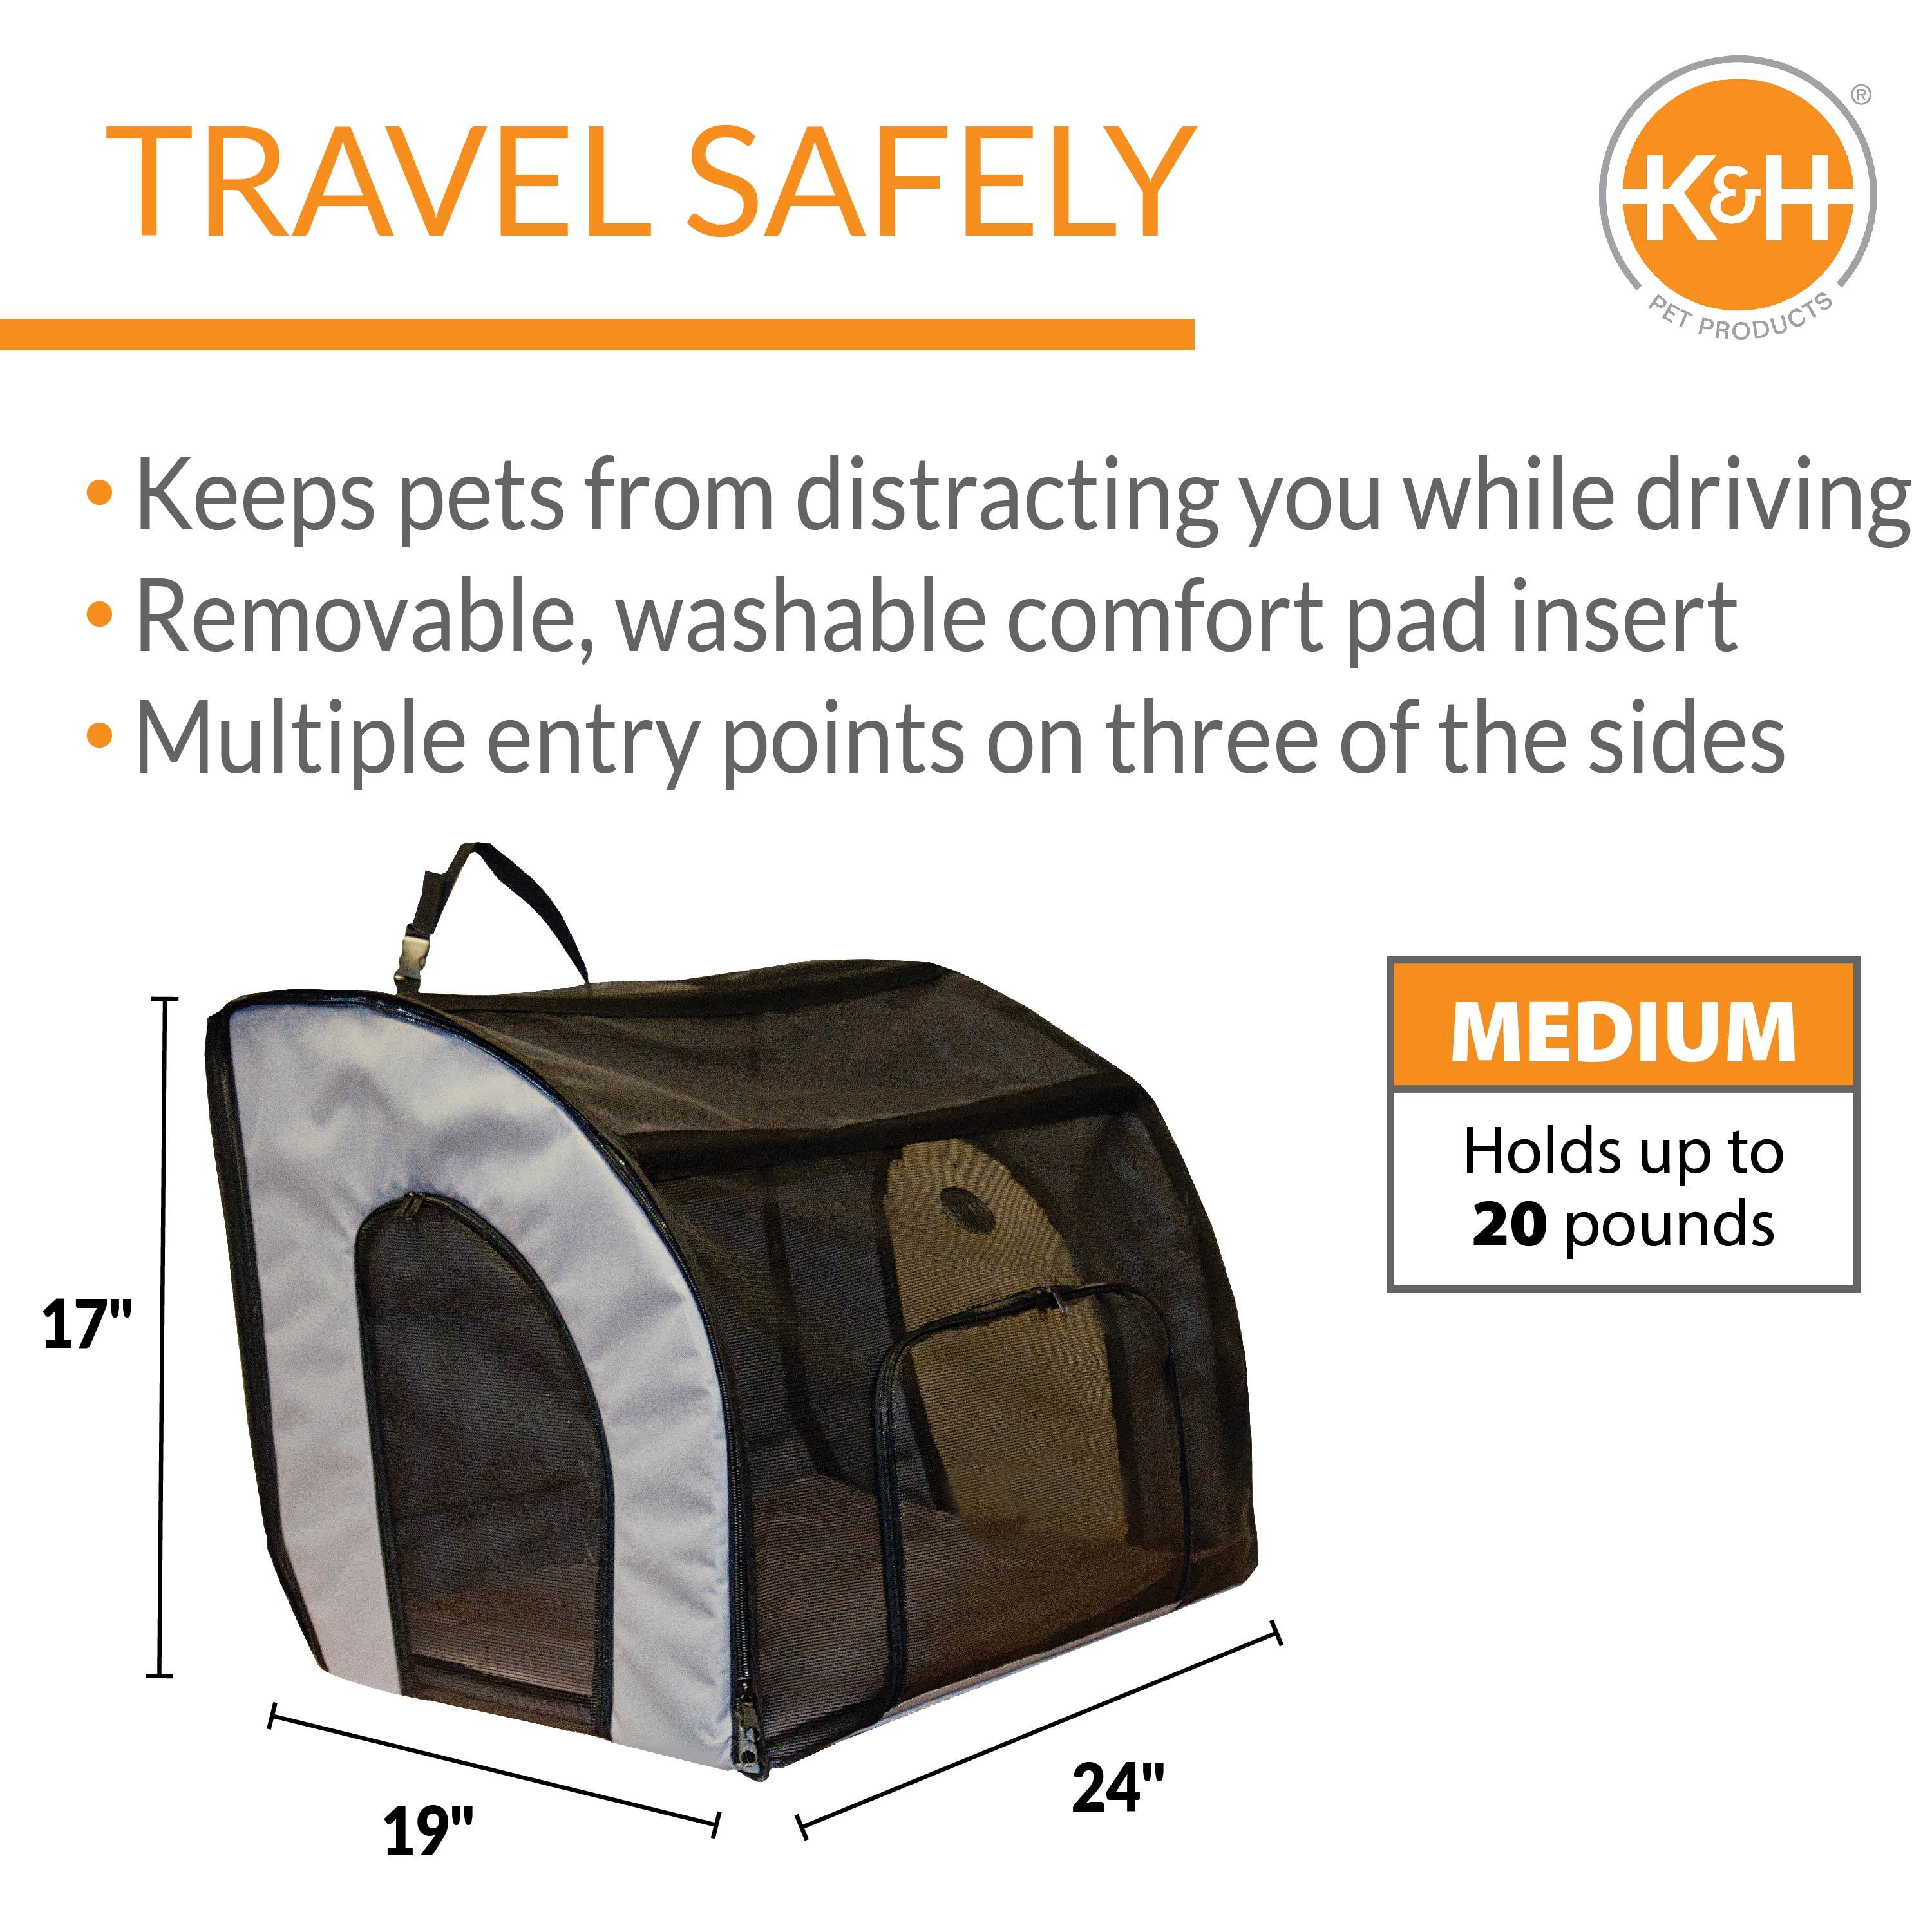 K&H Travel Safety Carrier - image 3 of 9